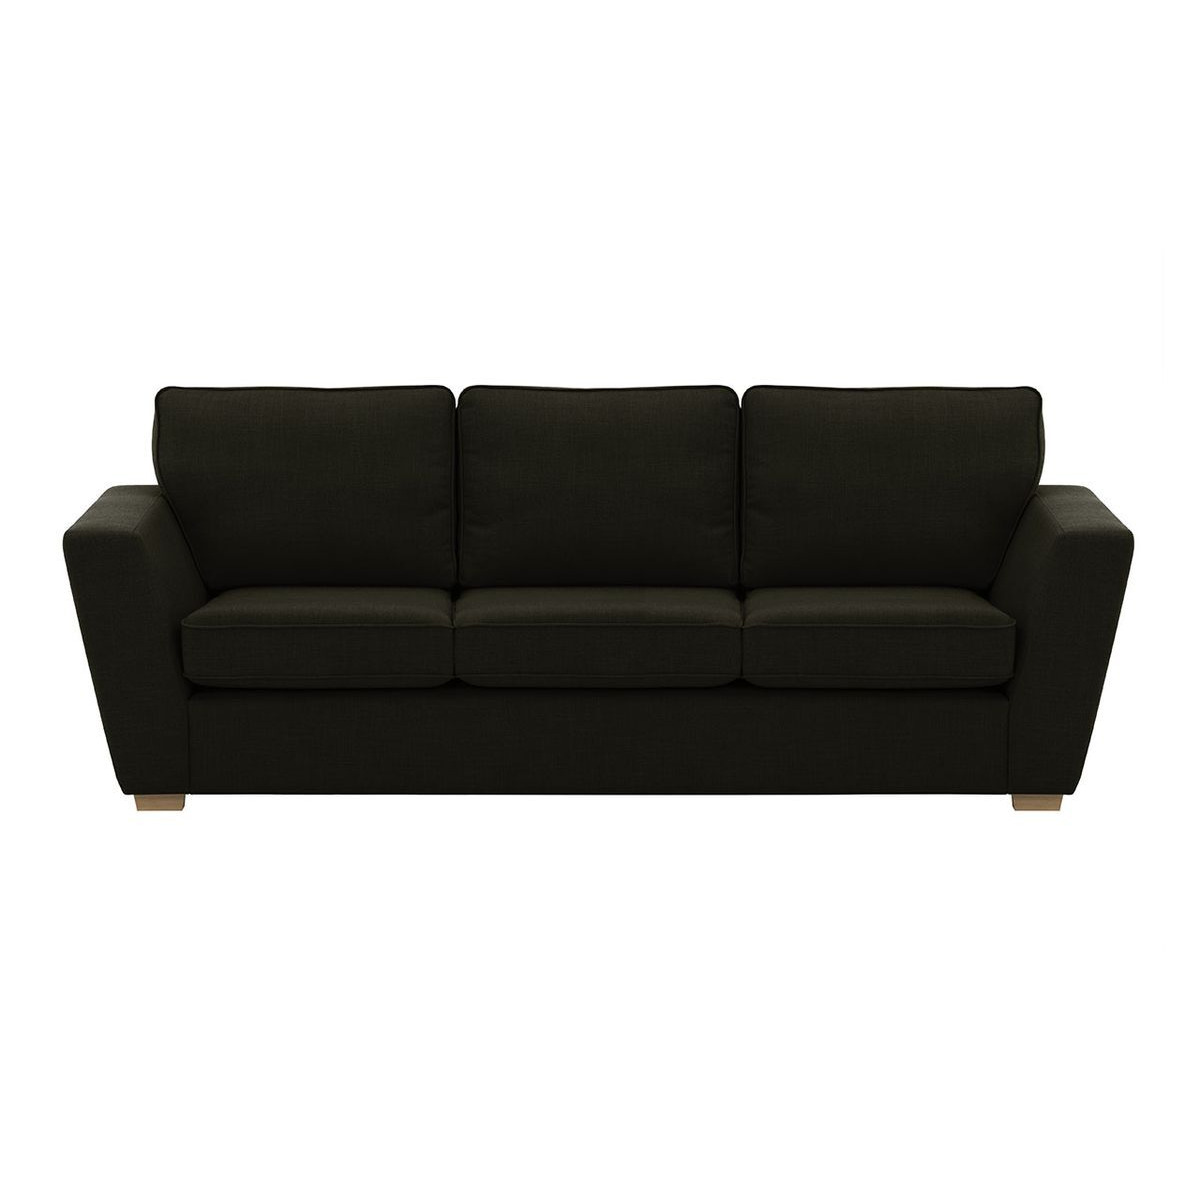 Inco 3 Seater Sofa, brown - image 1